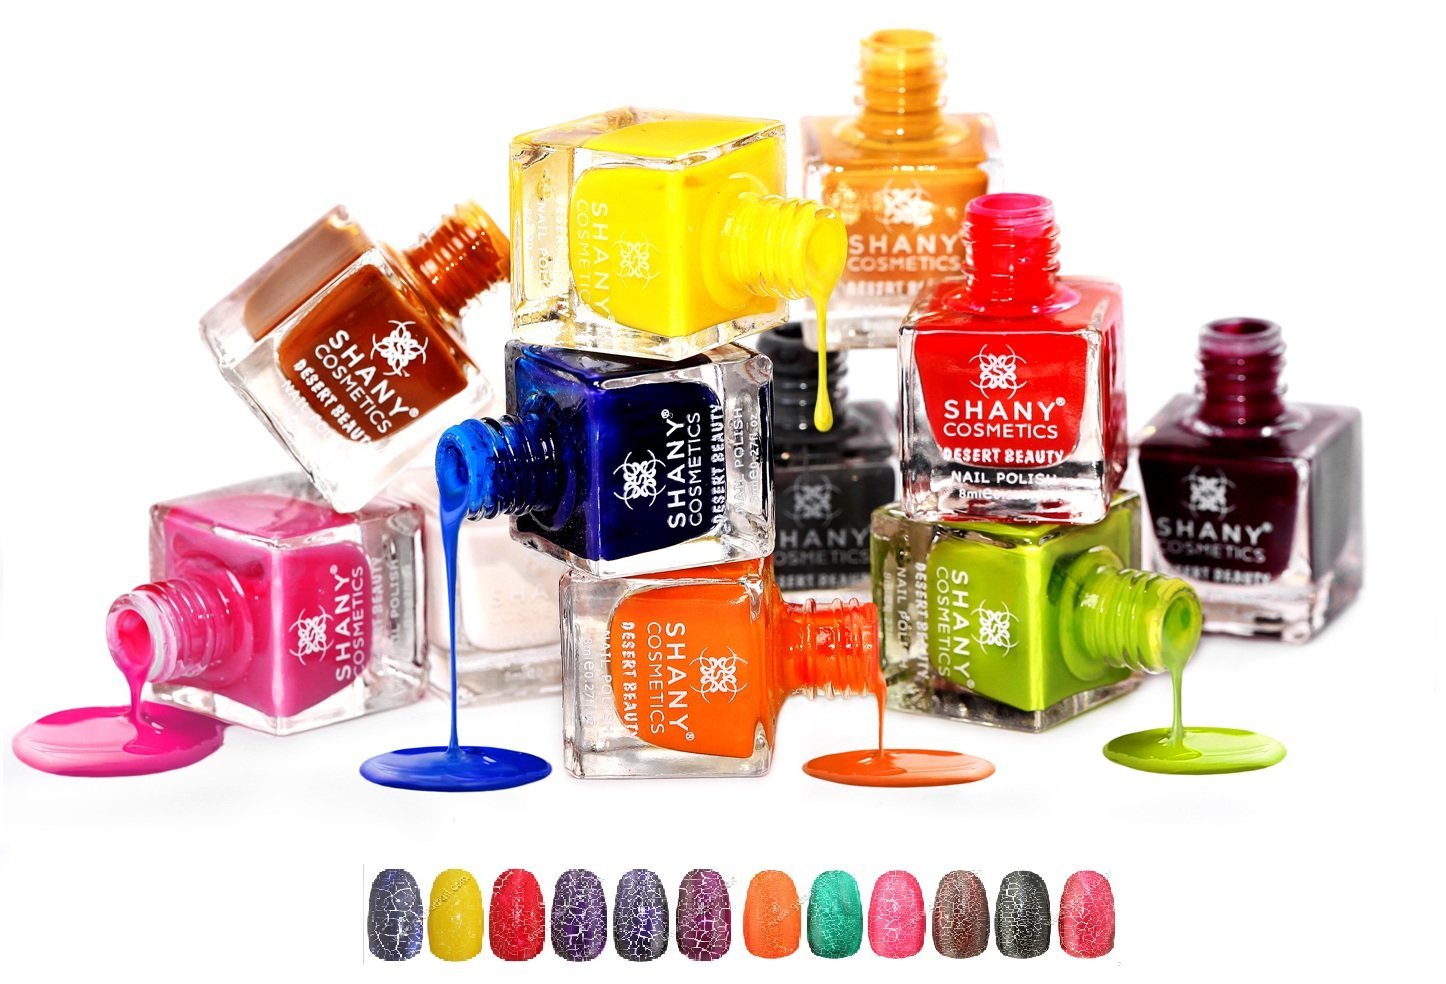 SHANY Cosmetics Desert Beauty Cracked Nail Polish Set (12 Famouse Colors), 15 Fluid Ounce